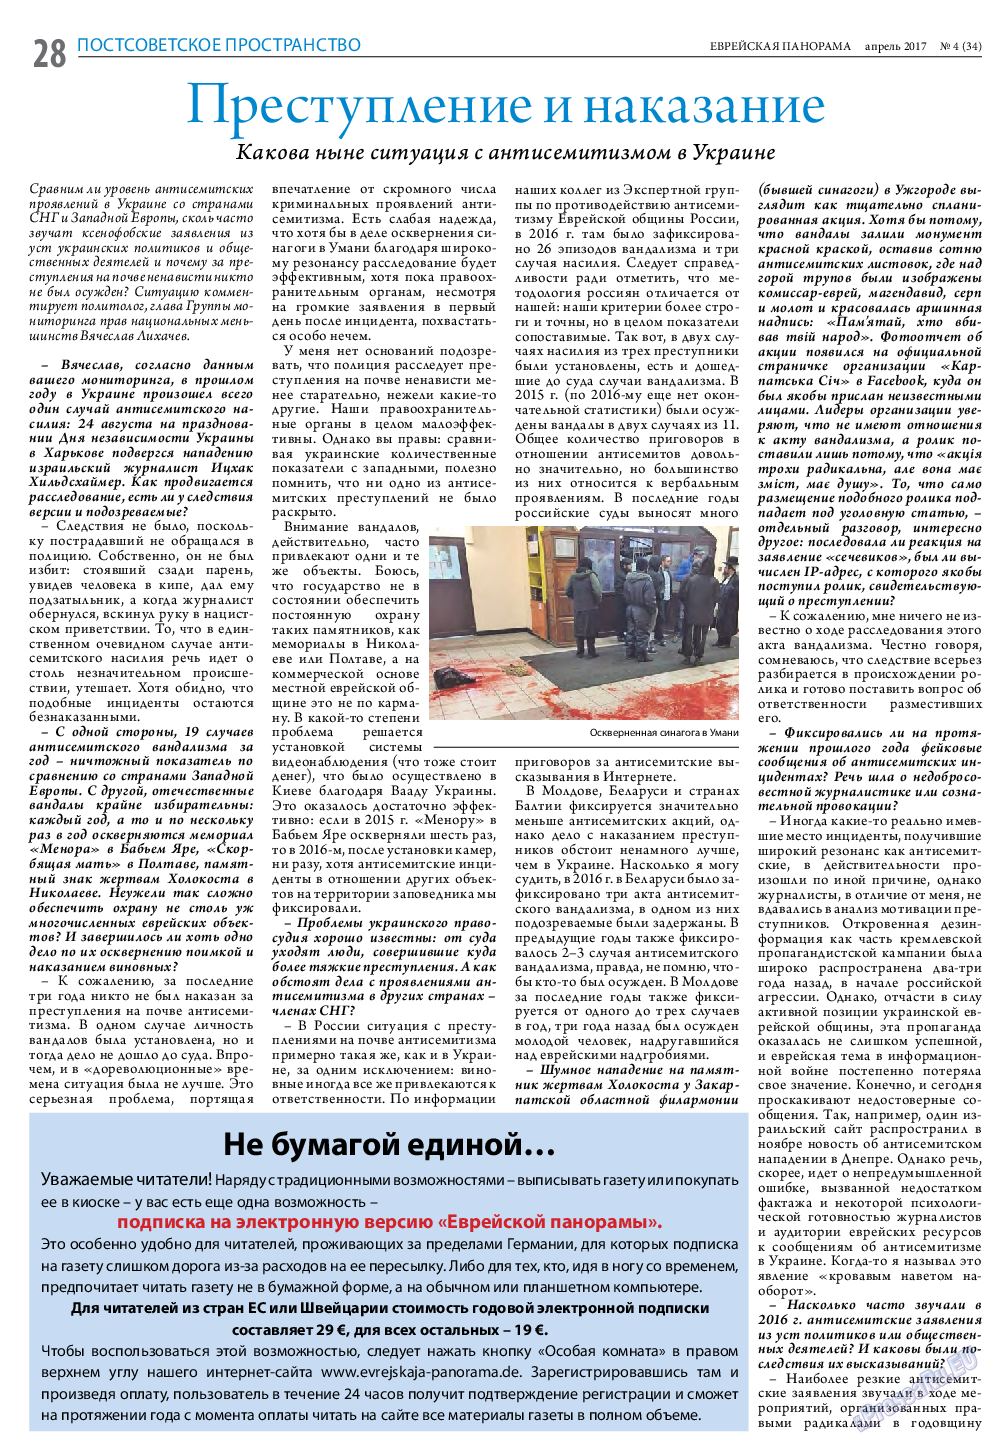 Еврейская панорама, газета. 2017 №4 стр.28